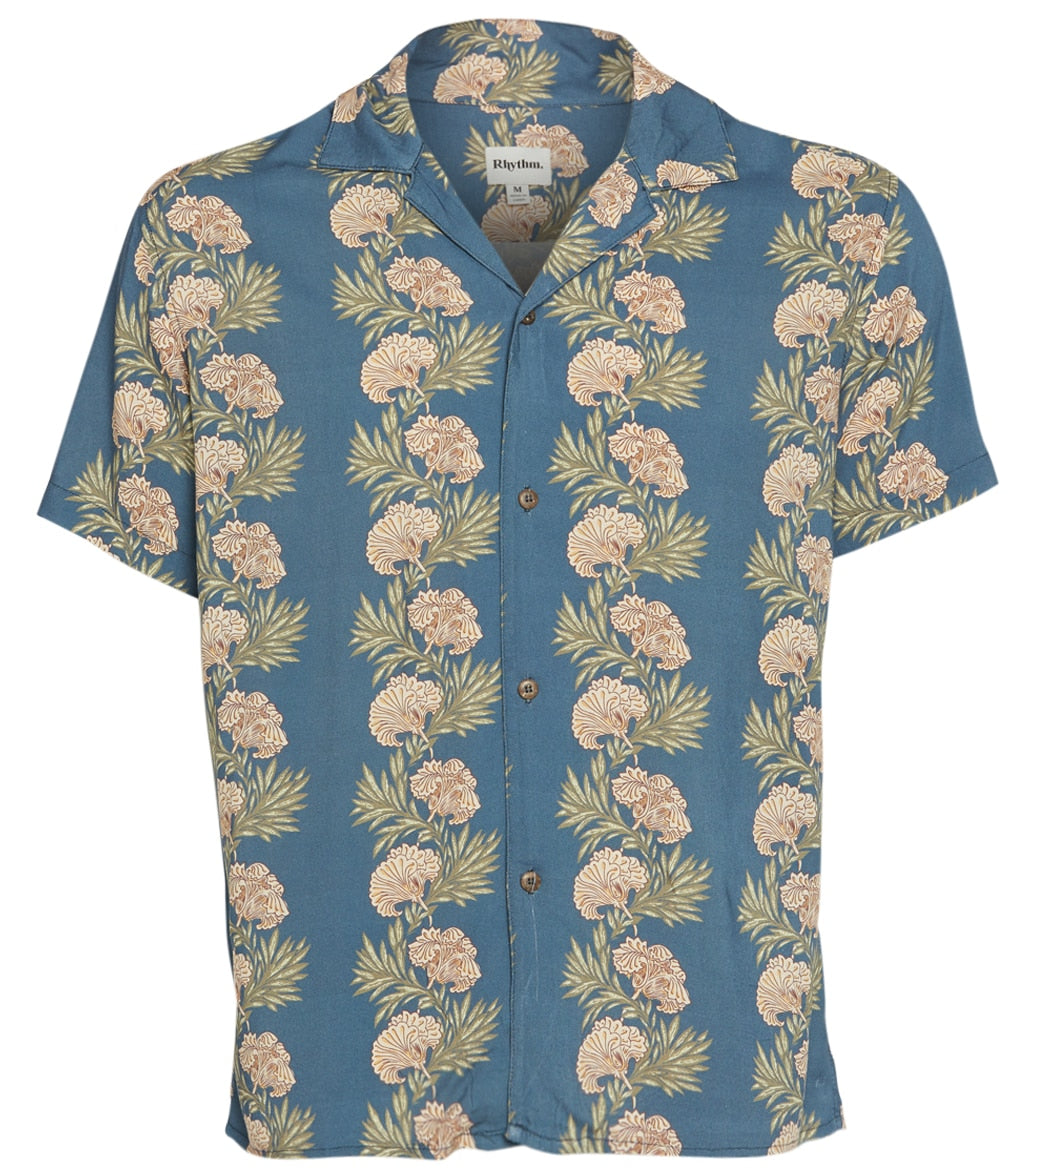 Rhythm Honolulu Short Sleeve Shirt - Pacific Blue Medium - Swimoutlet.com